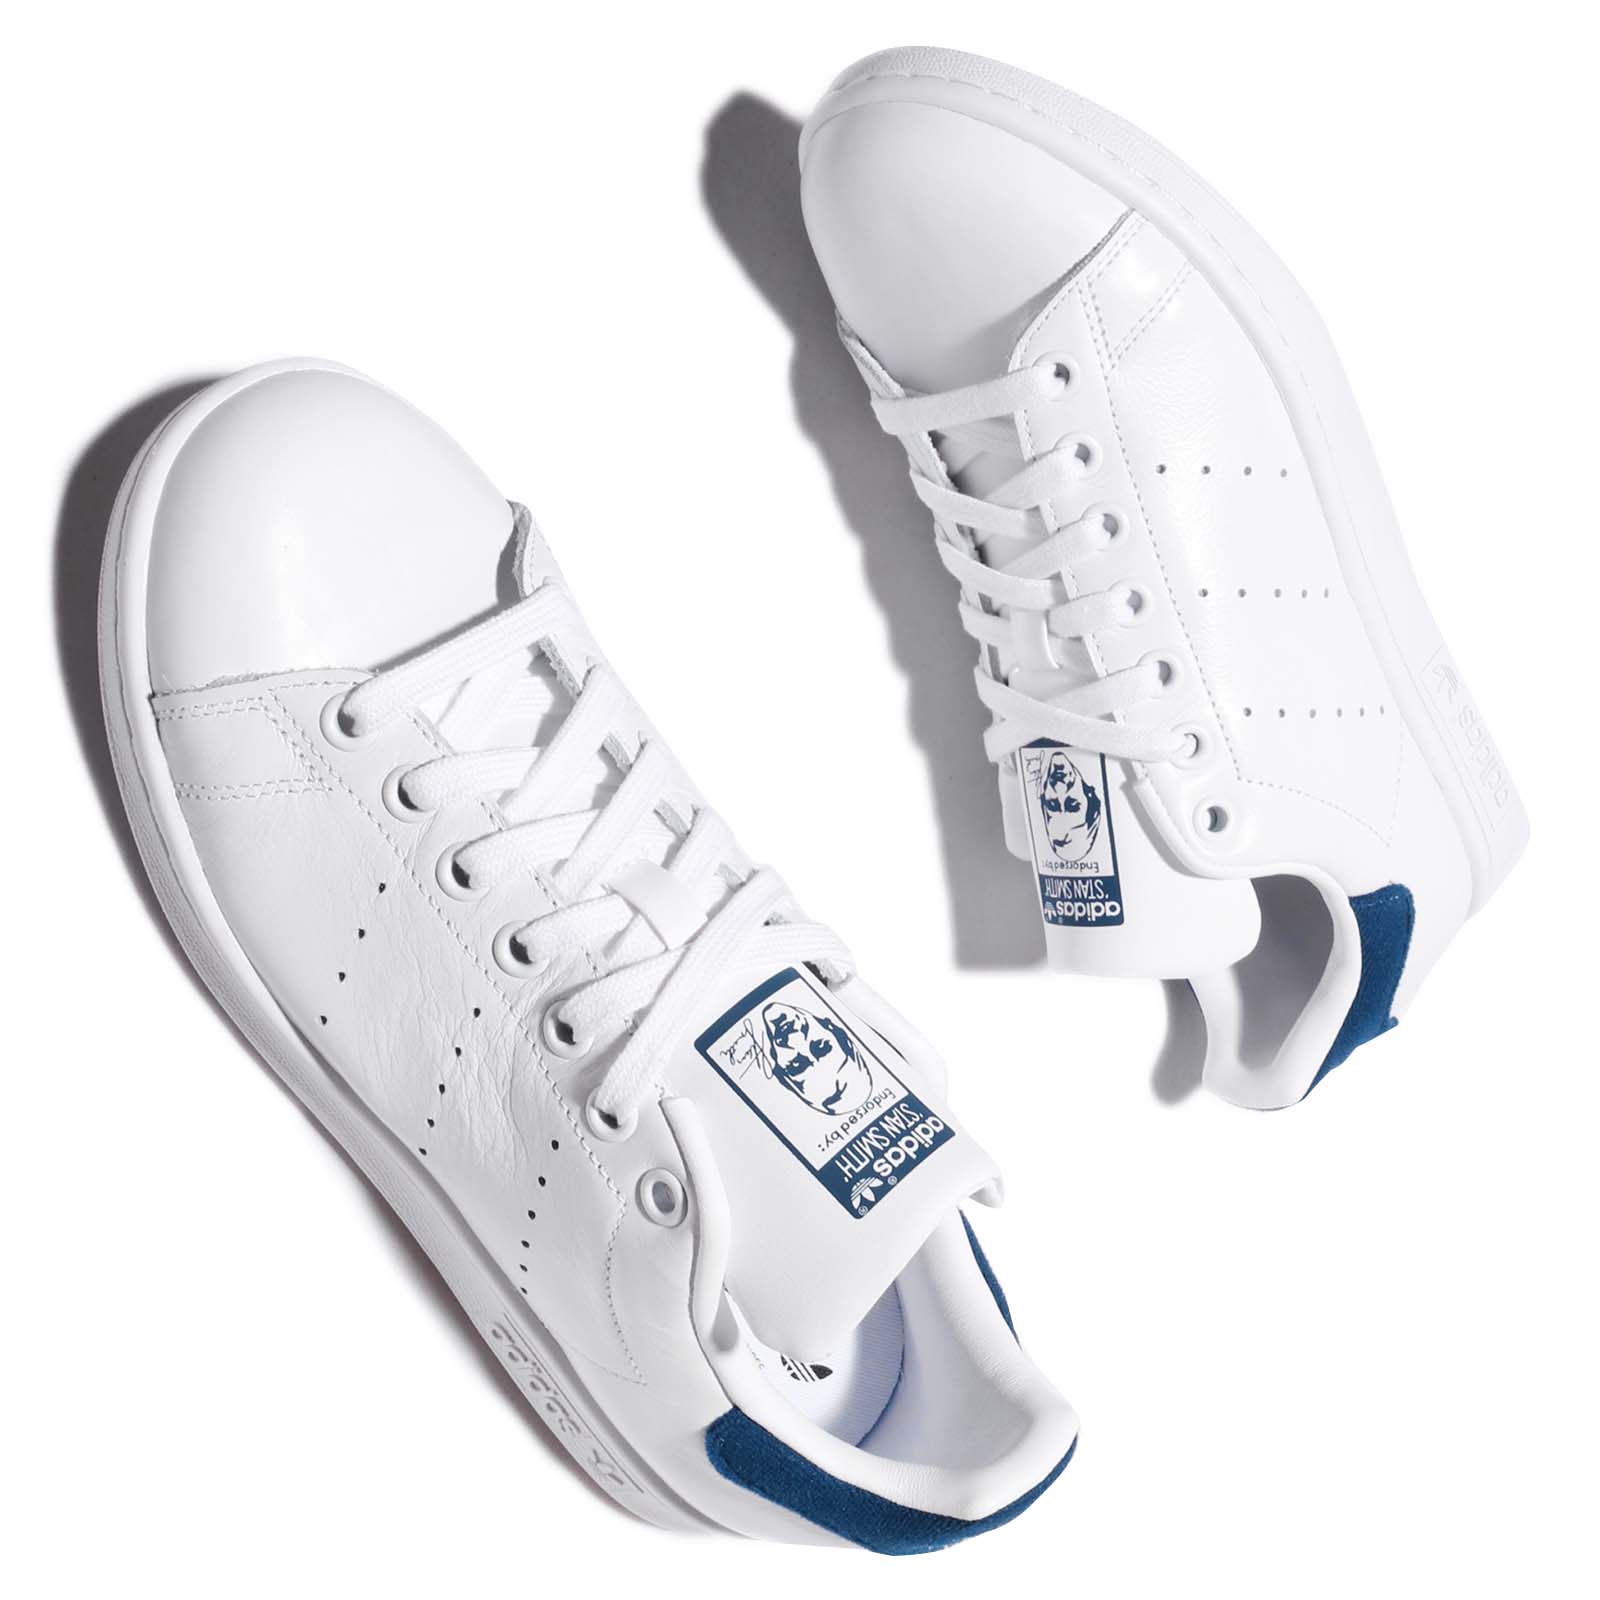 Giày thể thao Adidas Originals Stan Smith BZ0483 xanh dương - 1906925